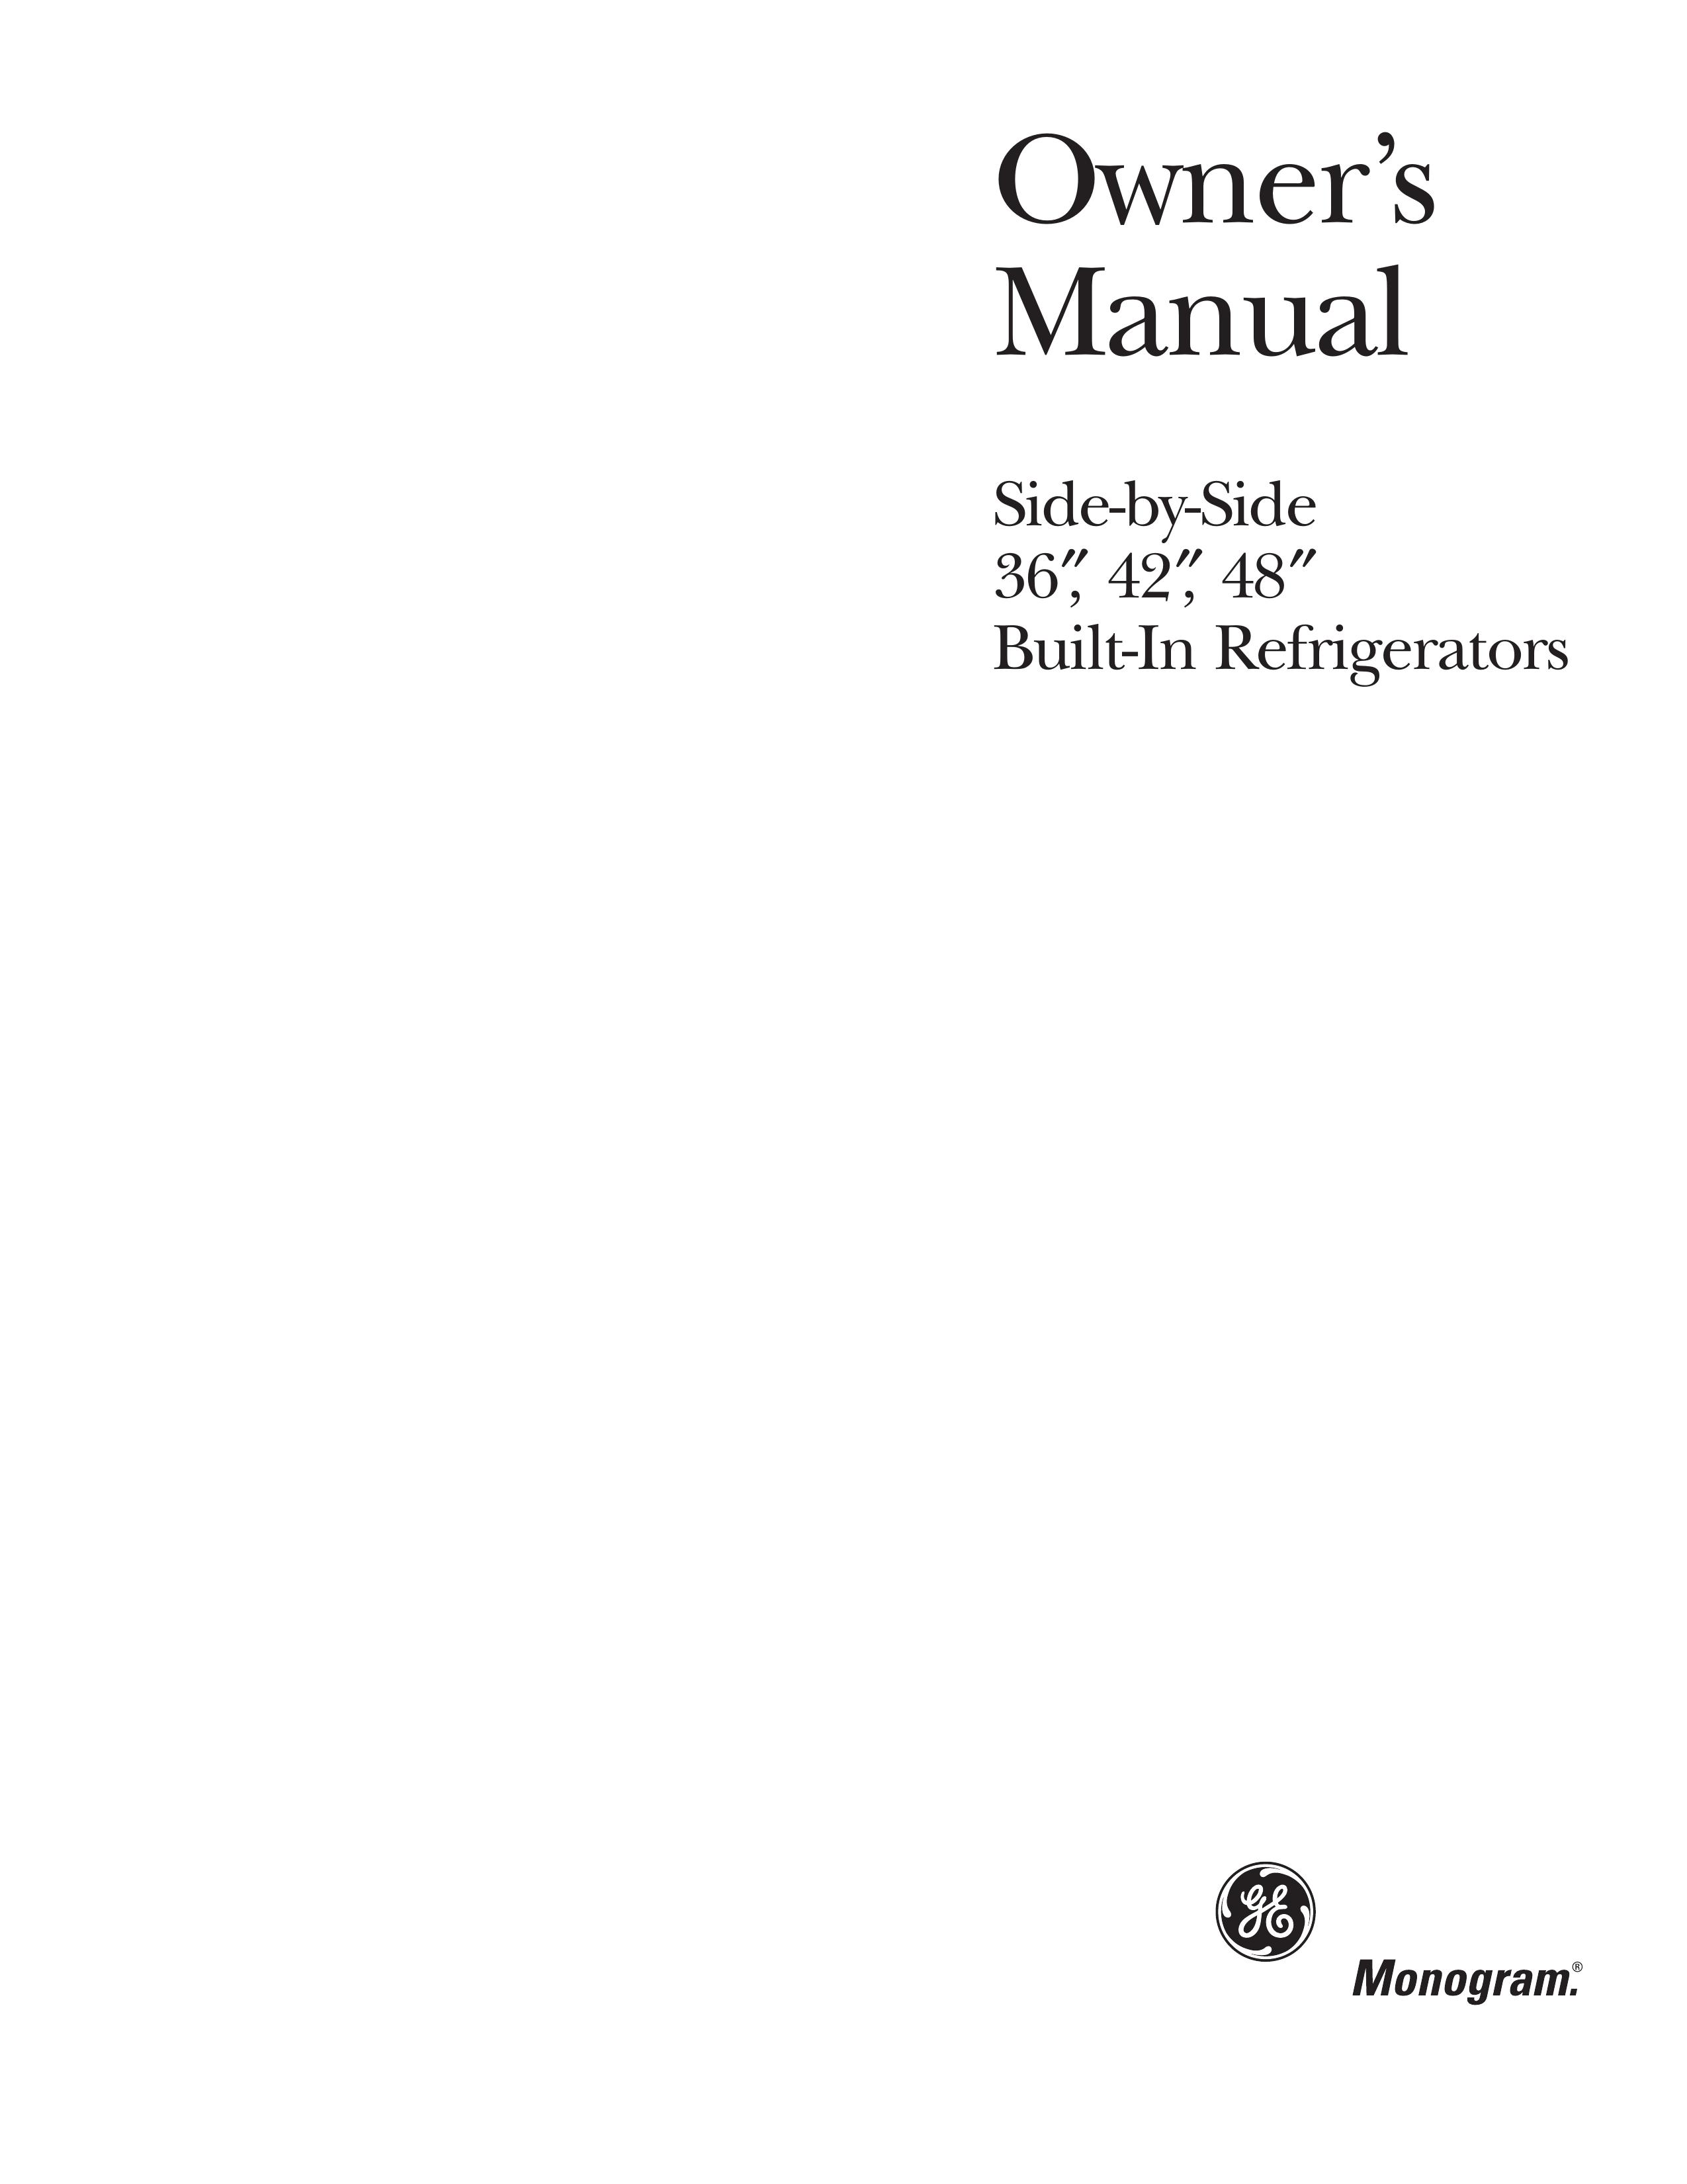 GE Monogram 48 Refrigerator User Manual